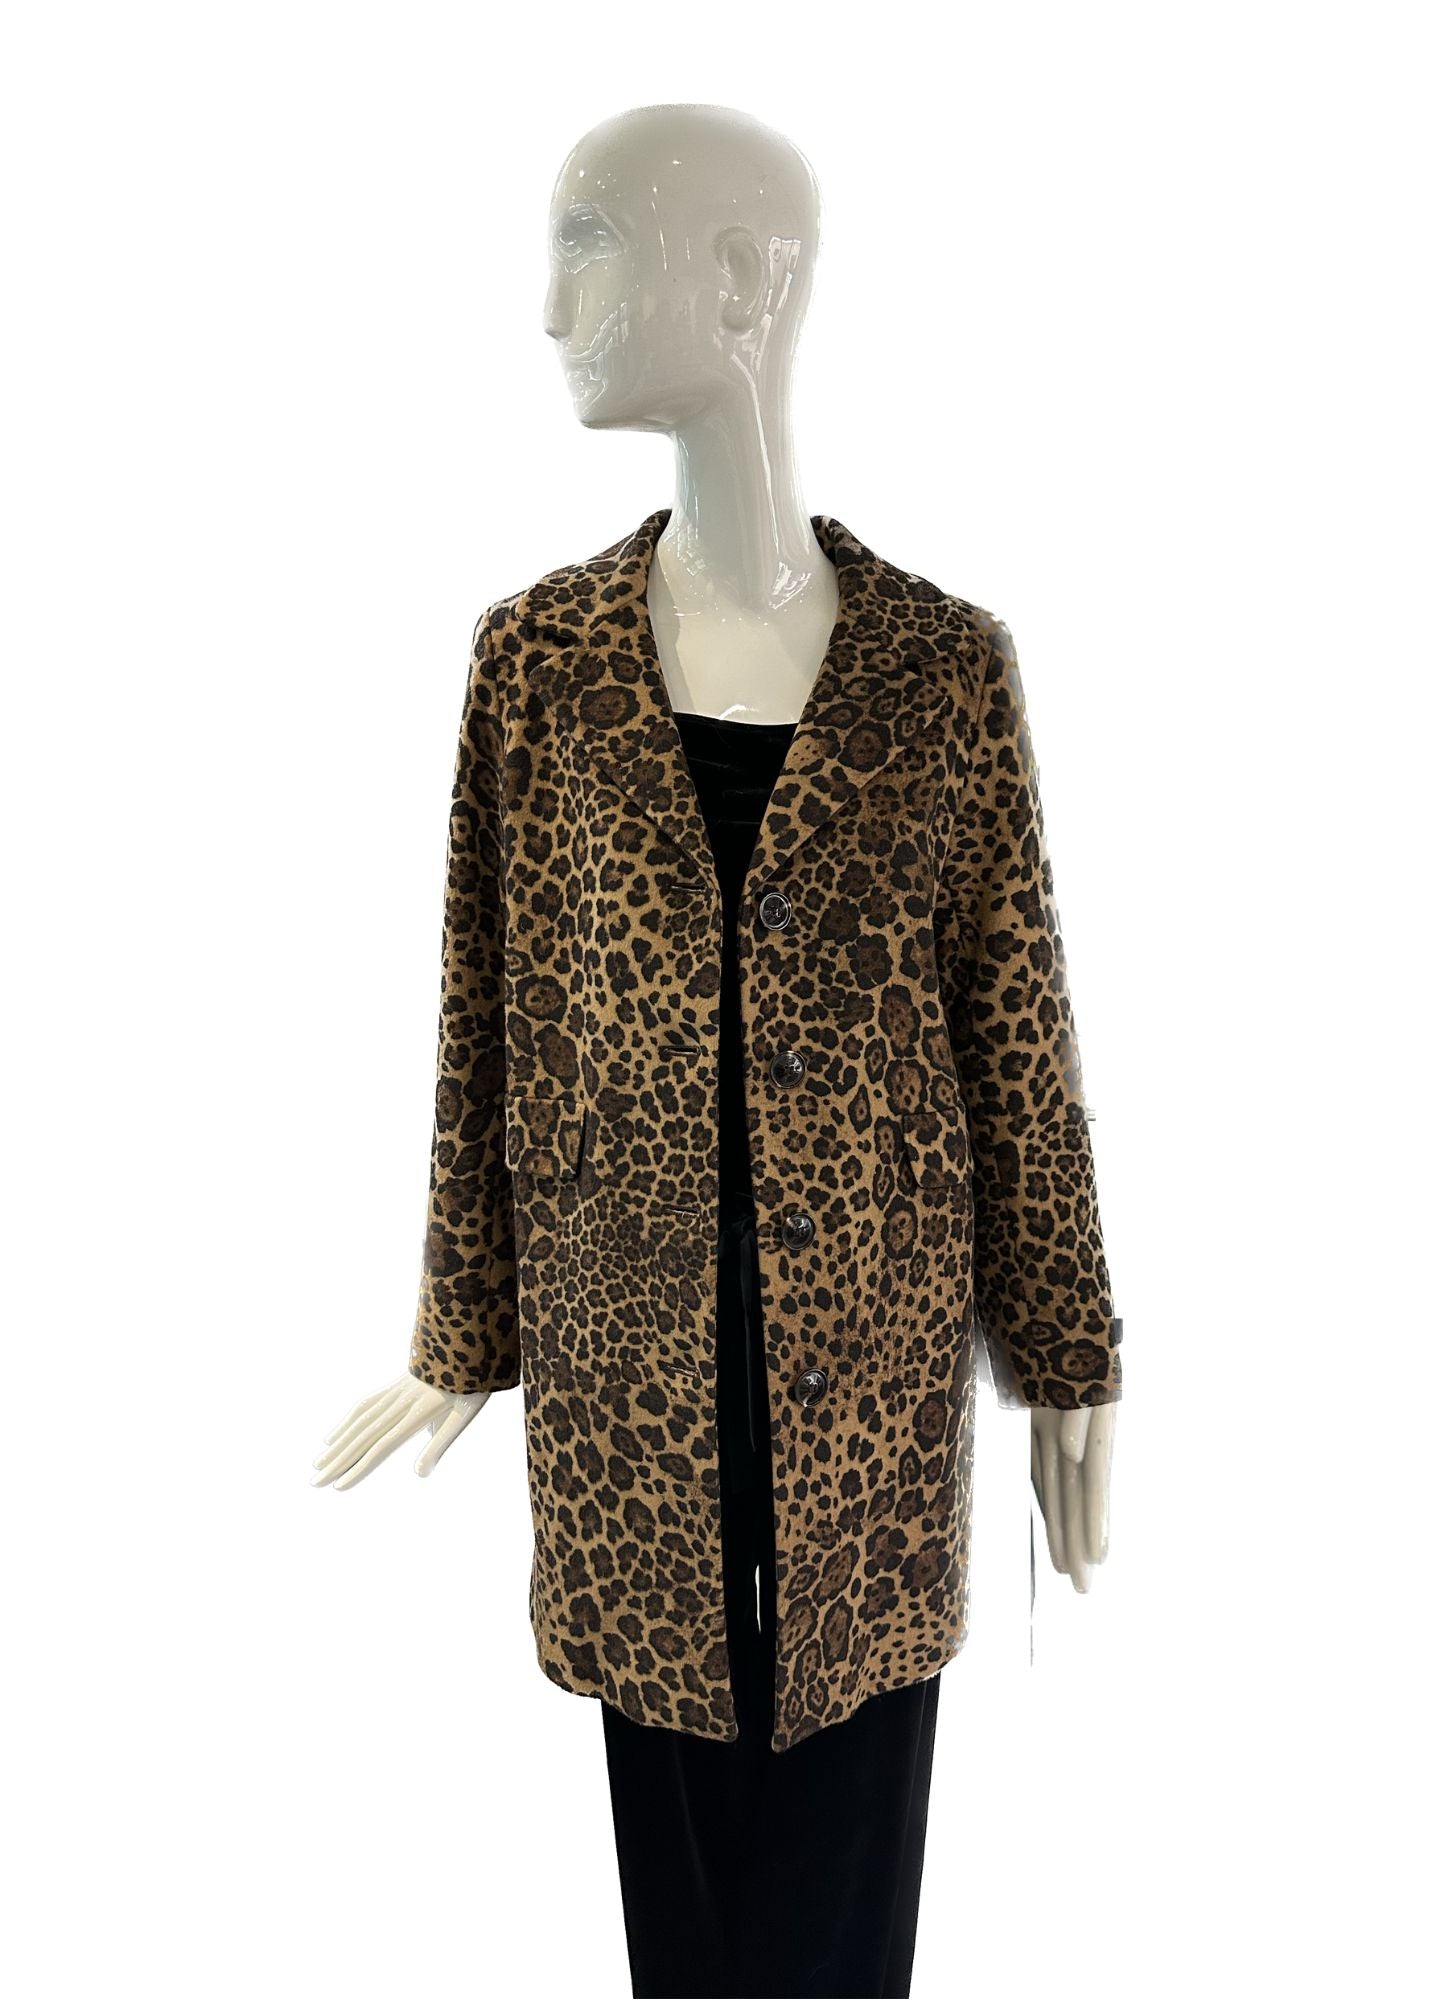 Sofia Cashmere Camel Leopard Print Cashmere Coat – The Plaza Hotel